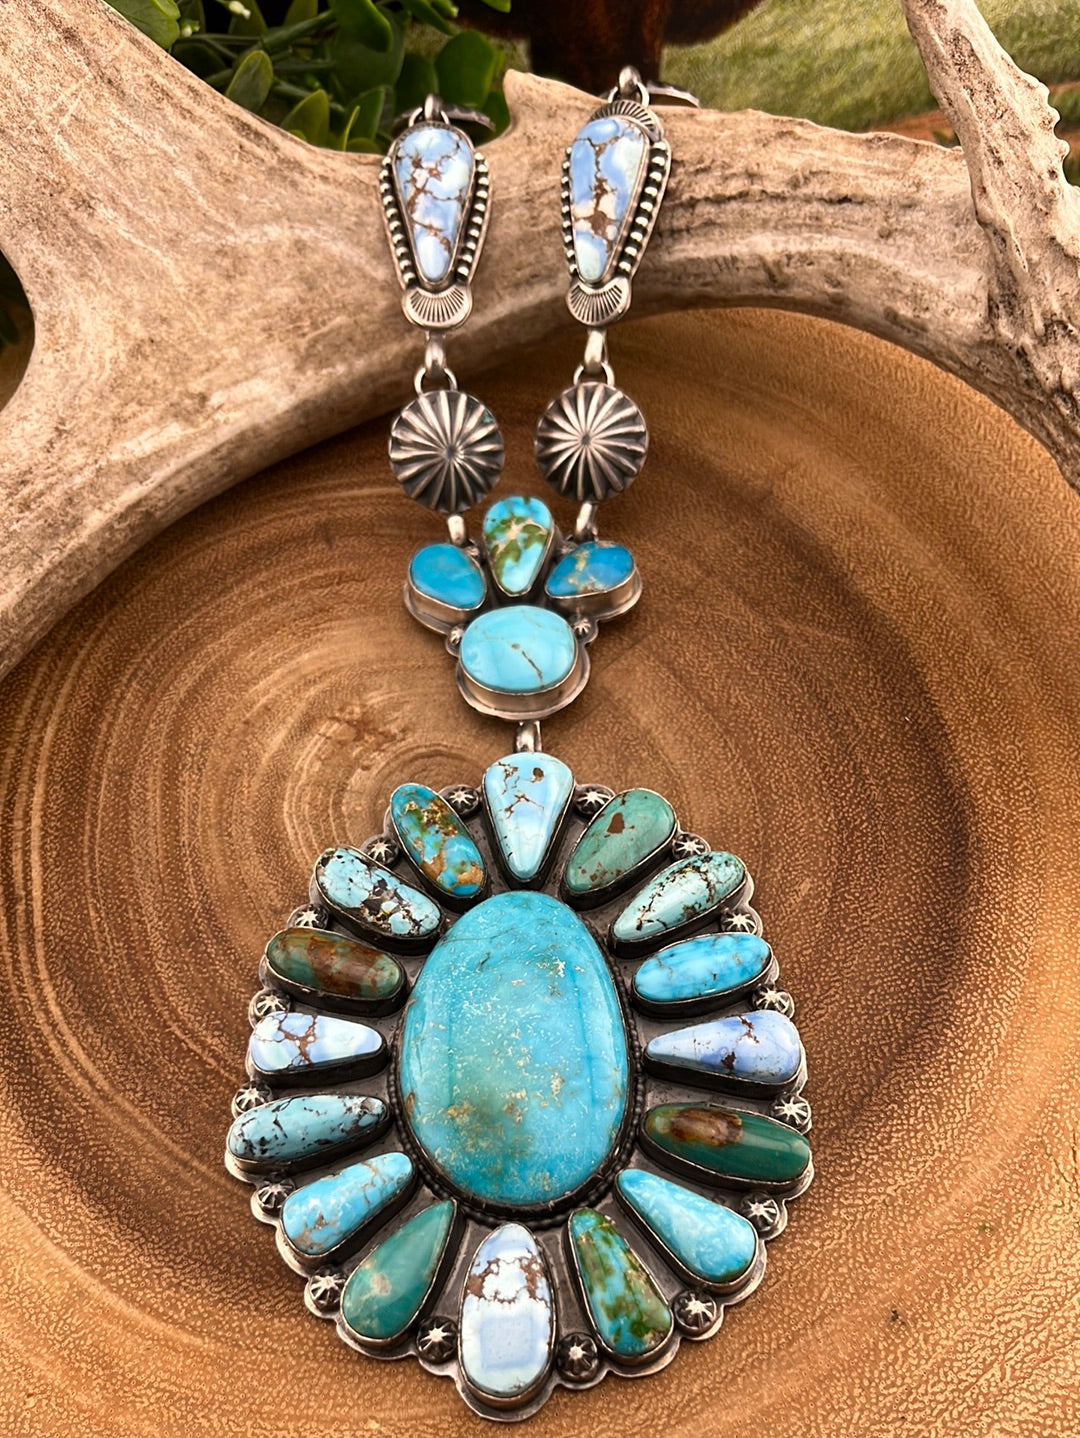 Vintage Turquoise Bib Necklace